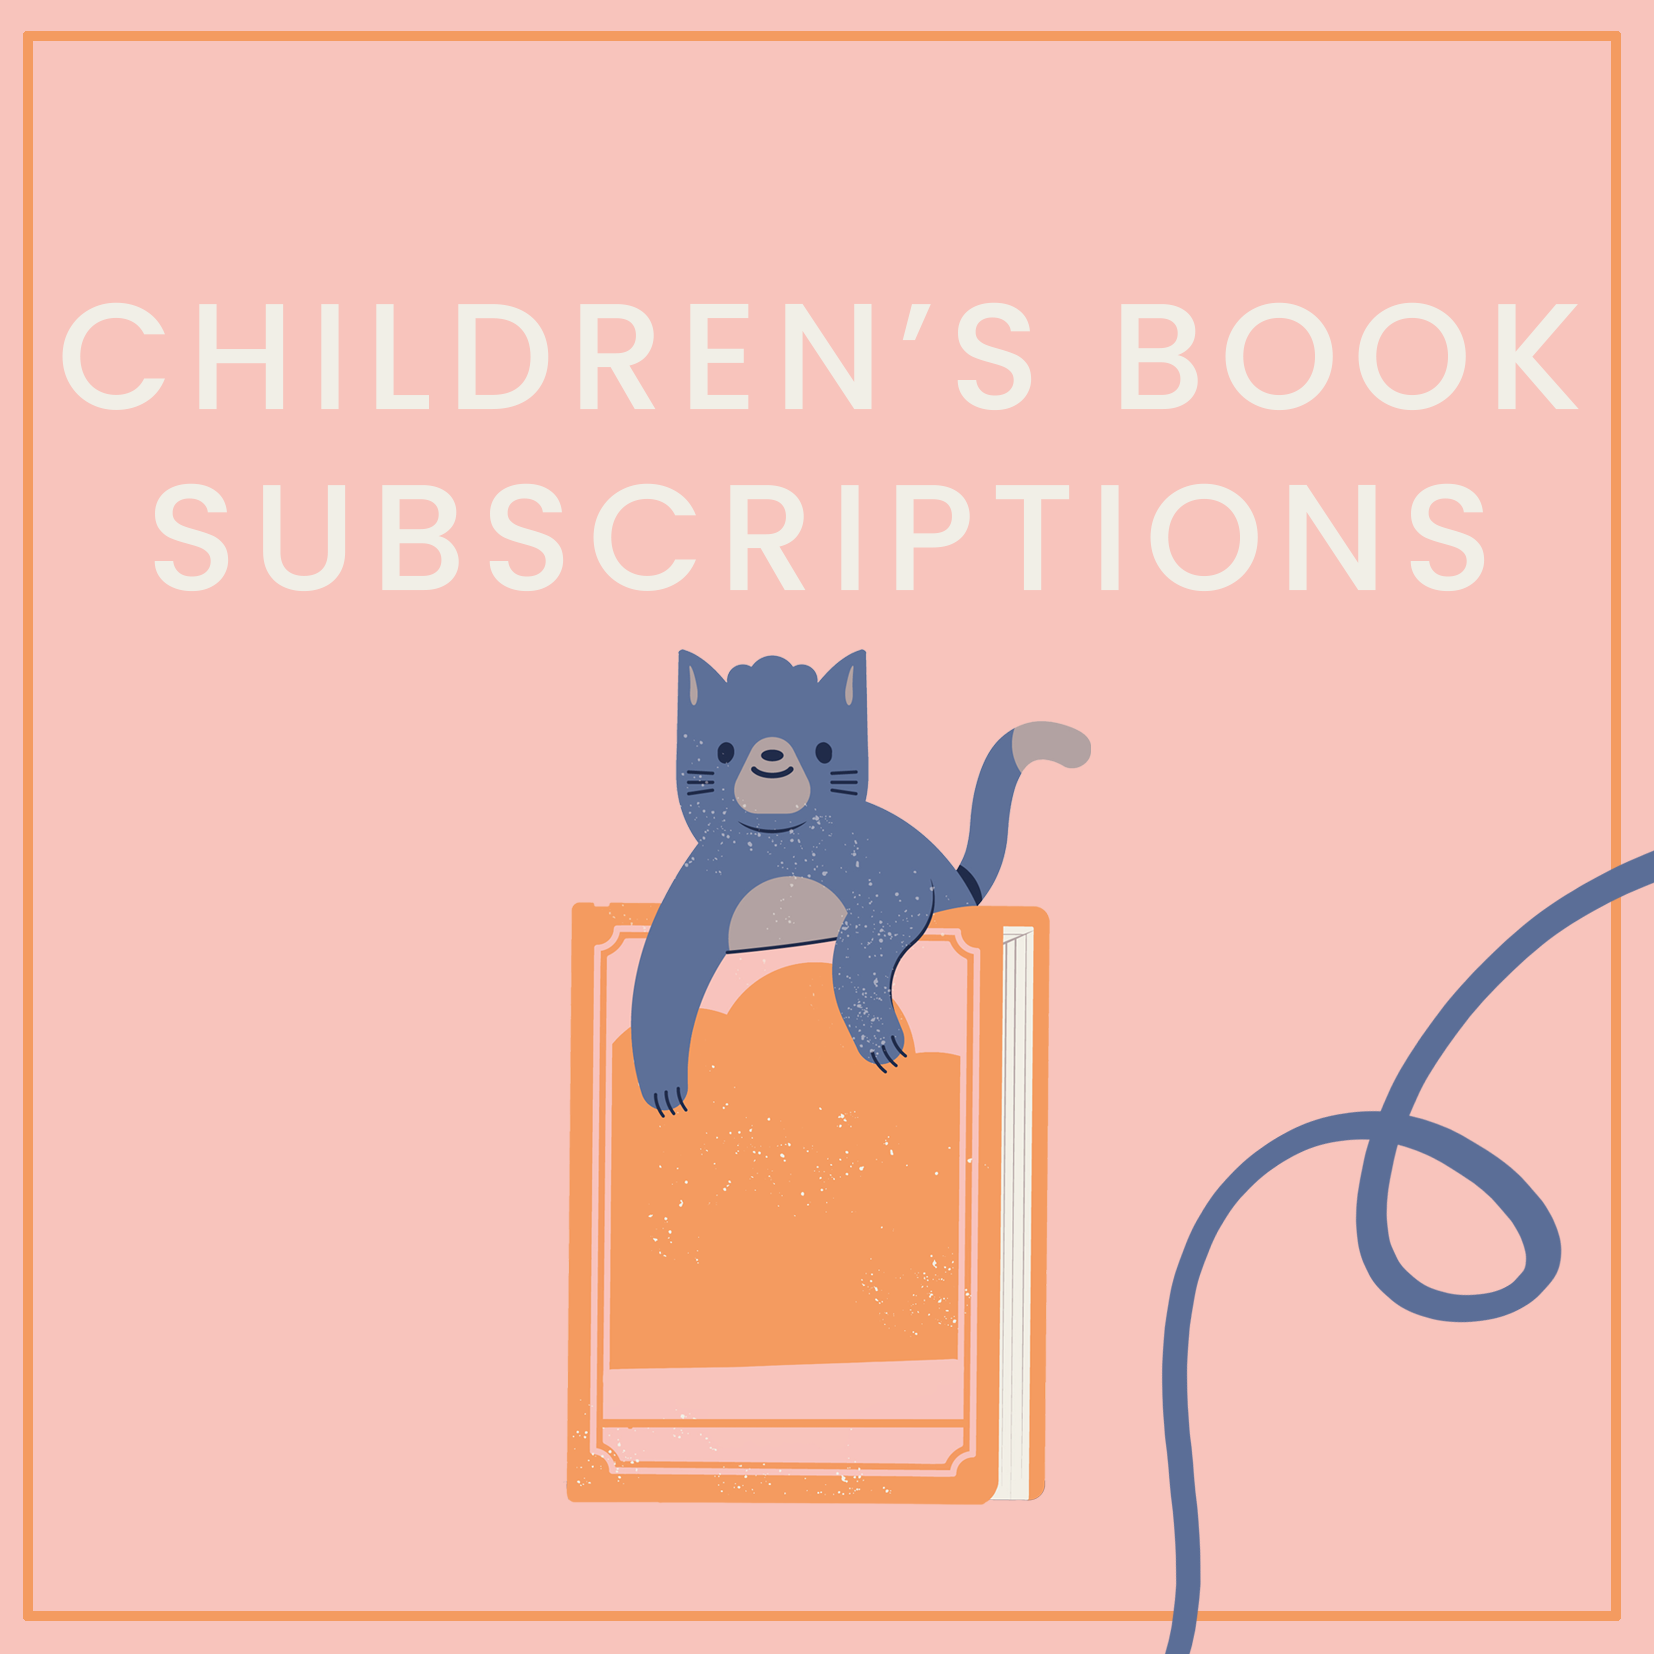 Children's Subscriptions